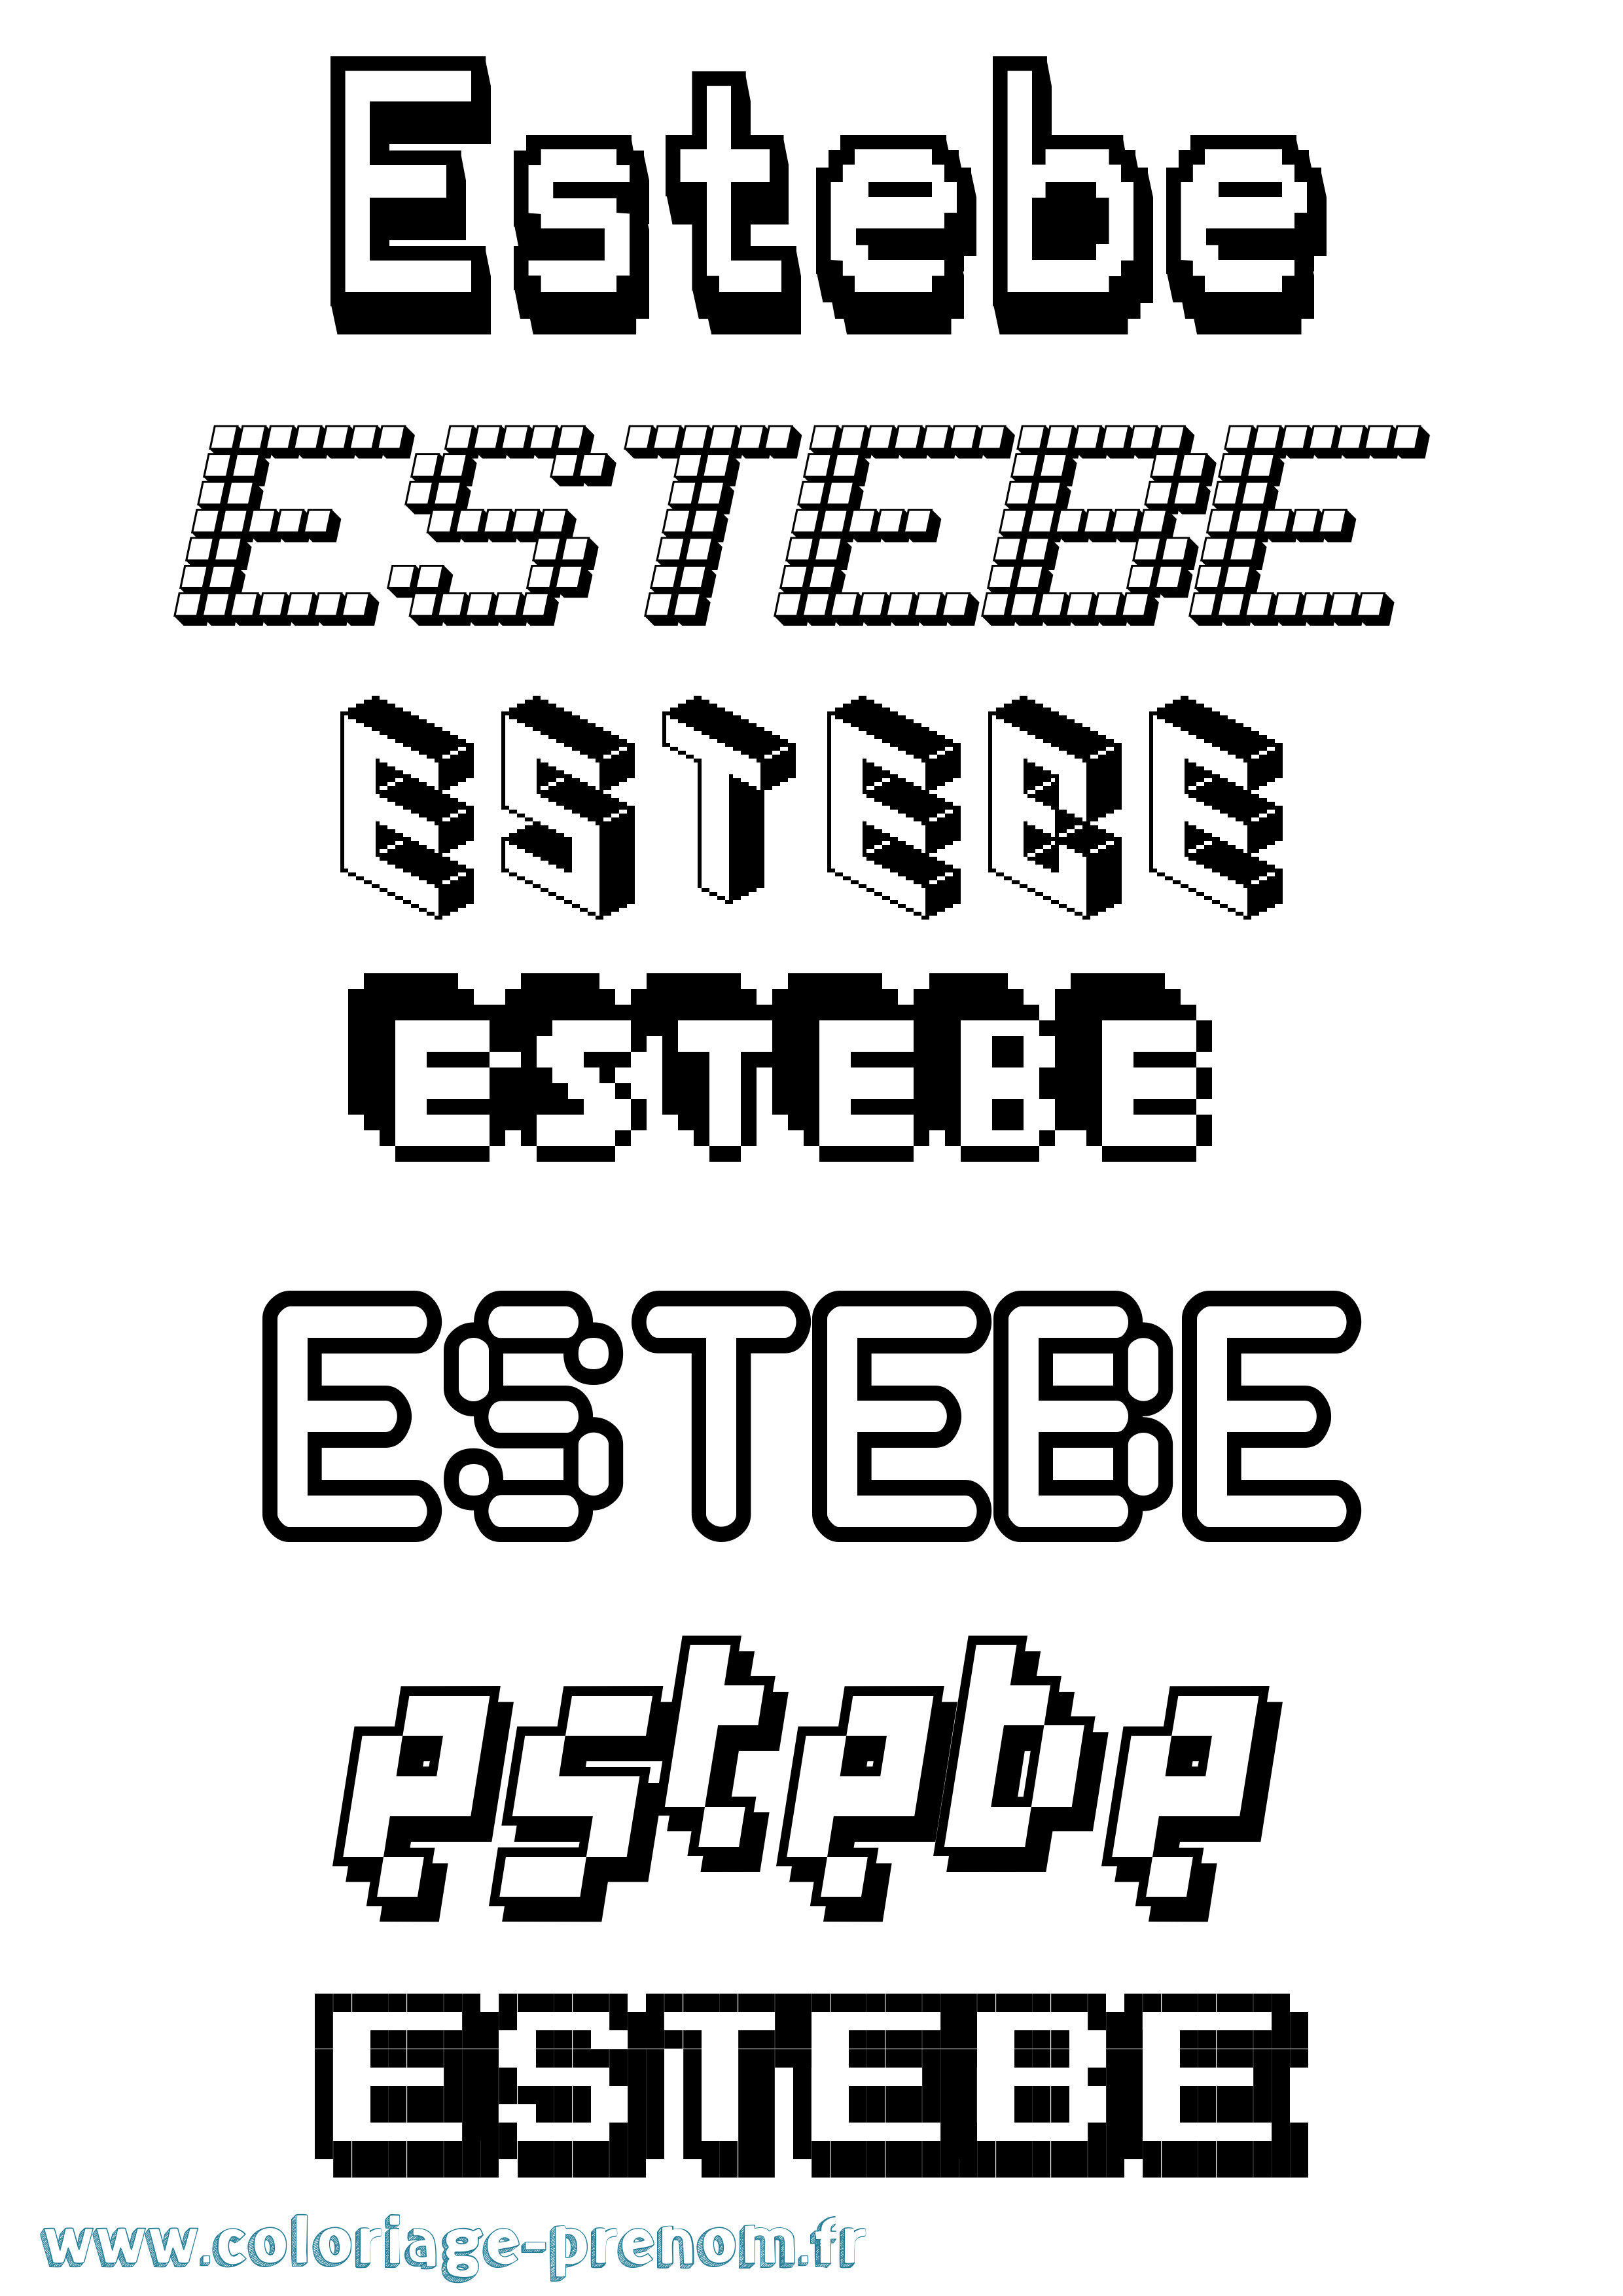 Coloriage prénom Estebe Pixel